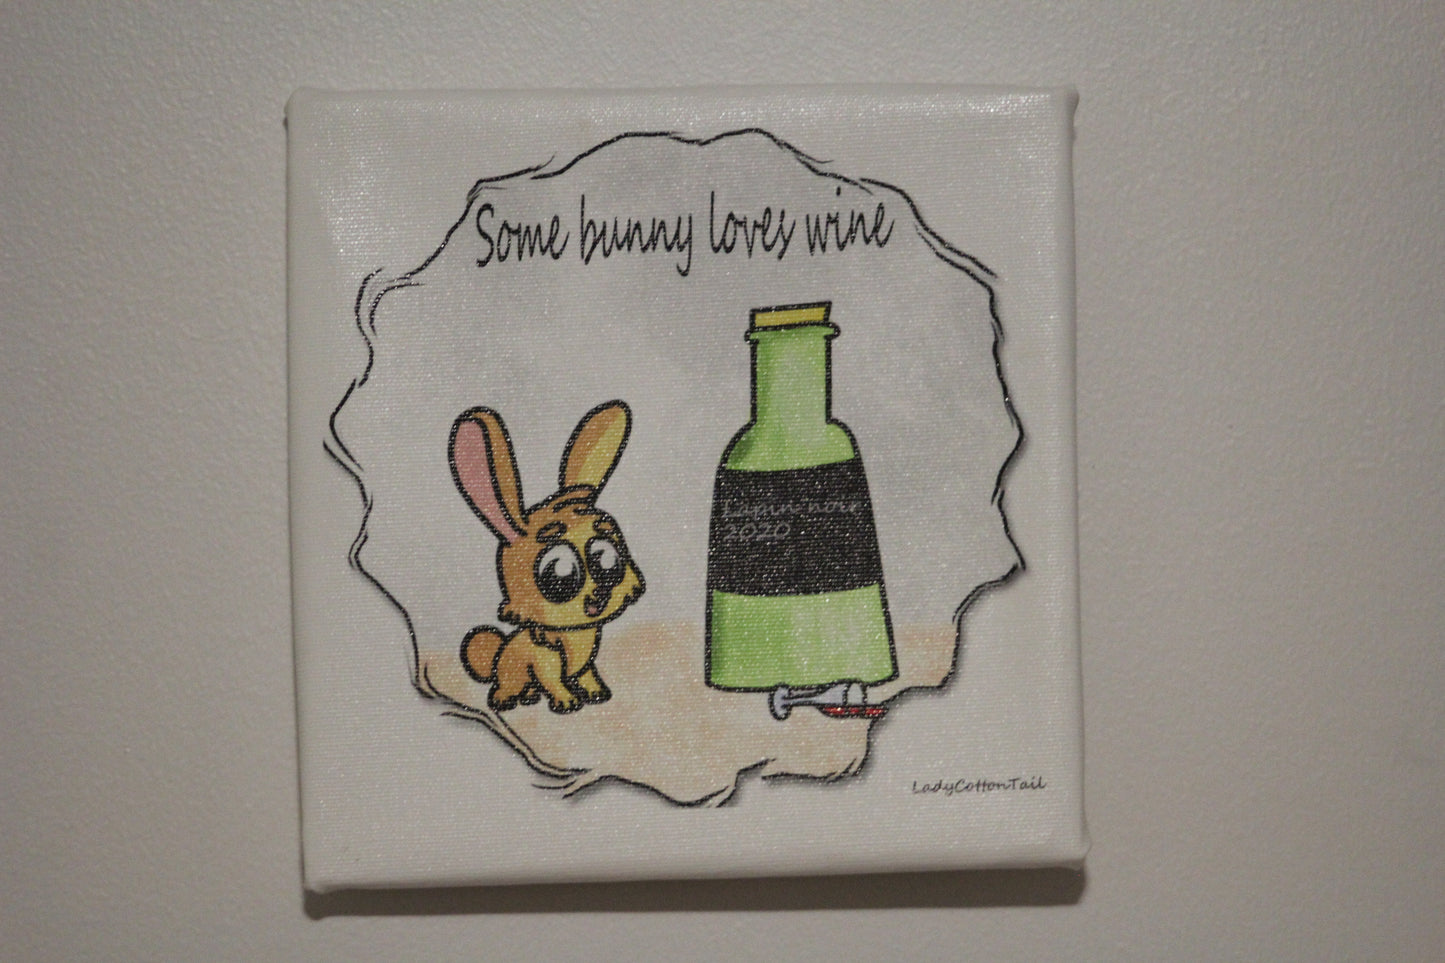 Some bunny love wine original cartoon art canvas print 7x7